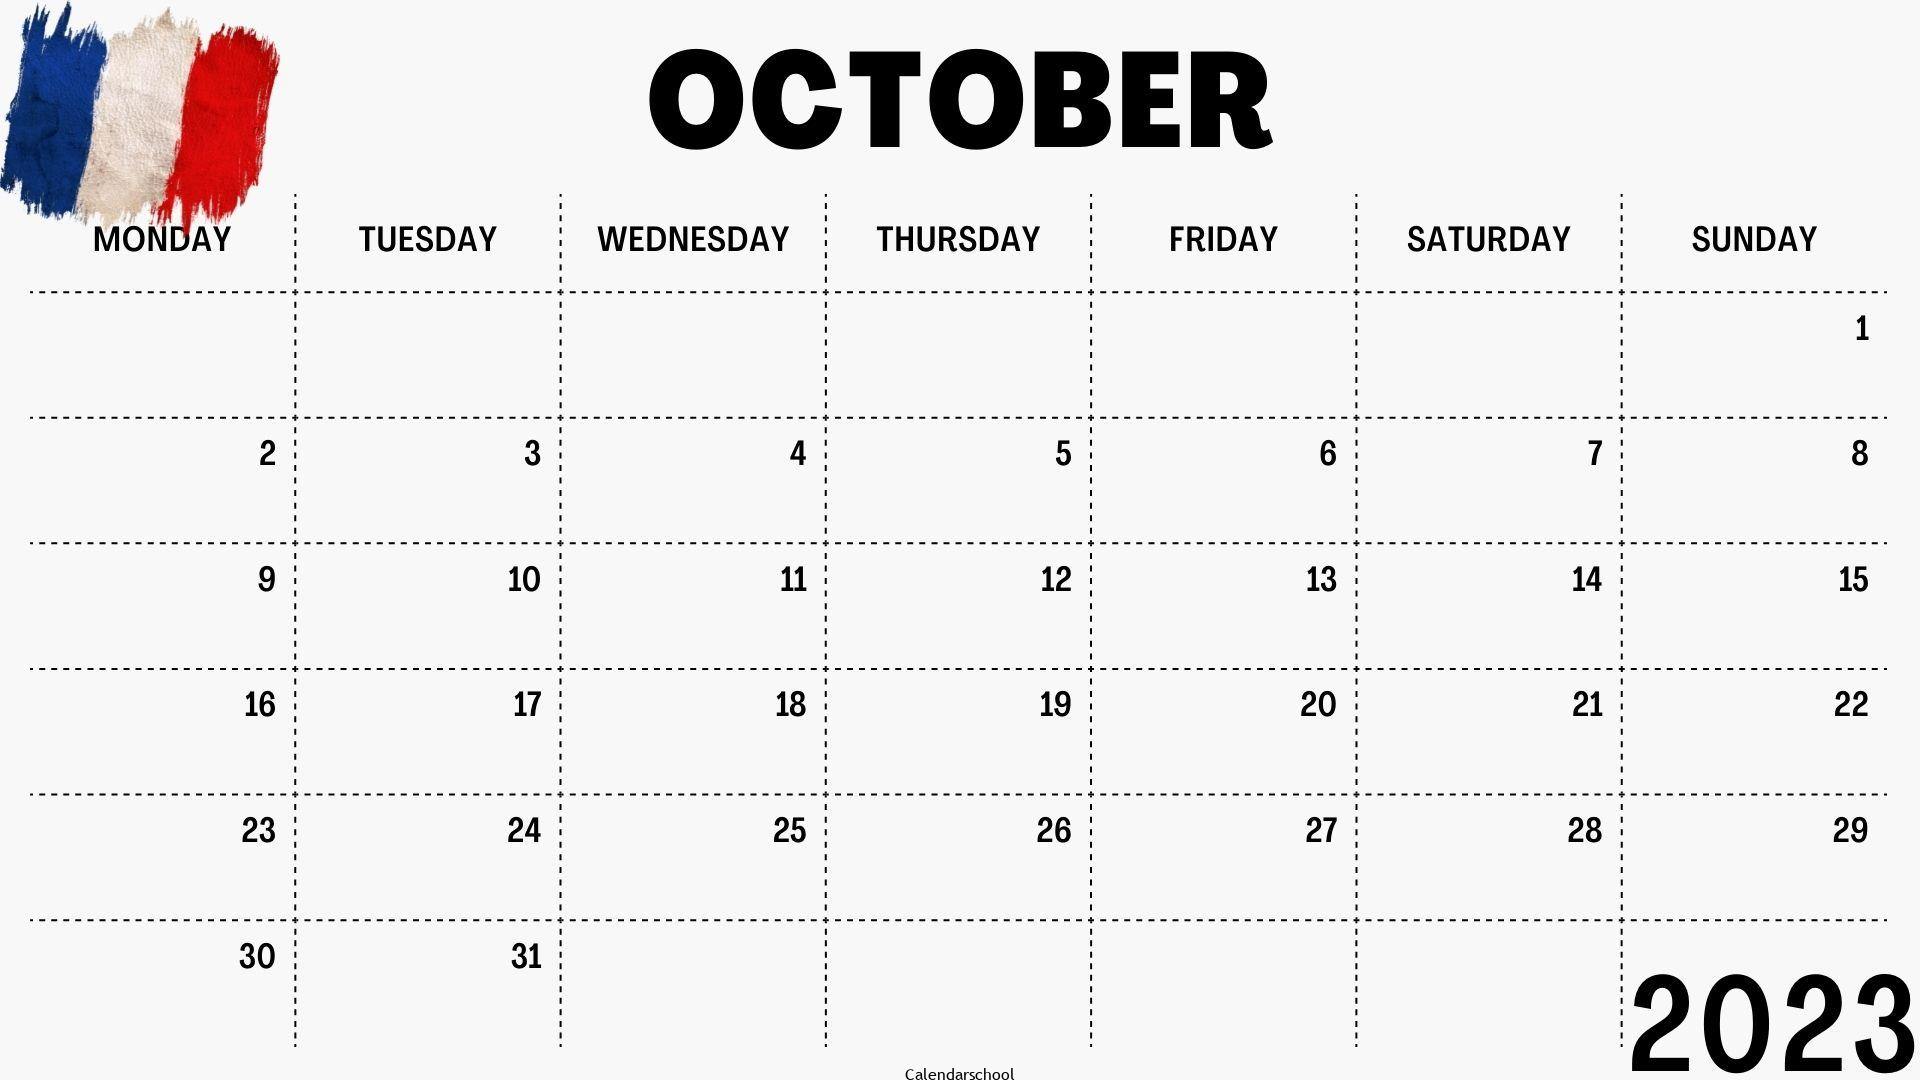 October 2023 Calendar with Holidays France